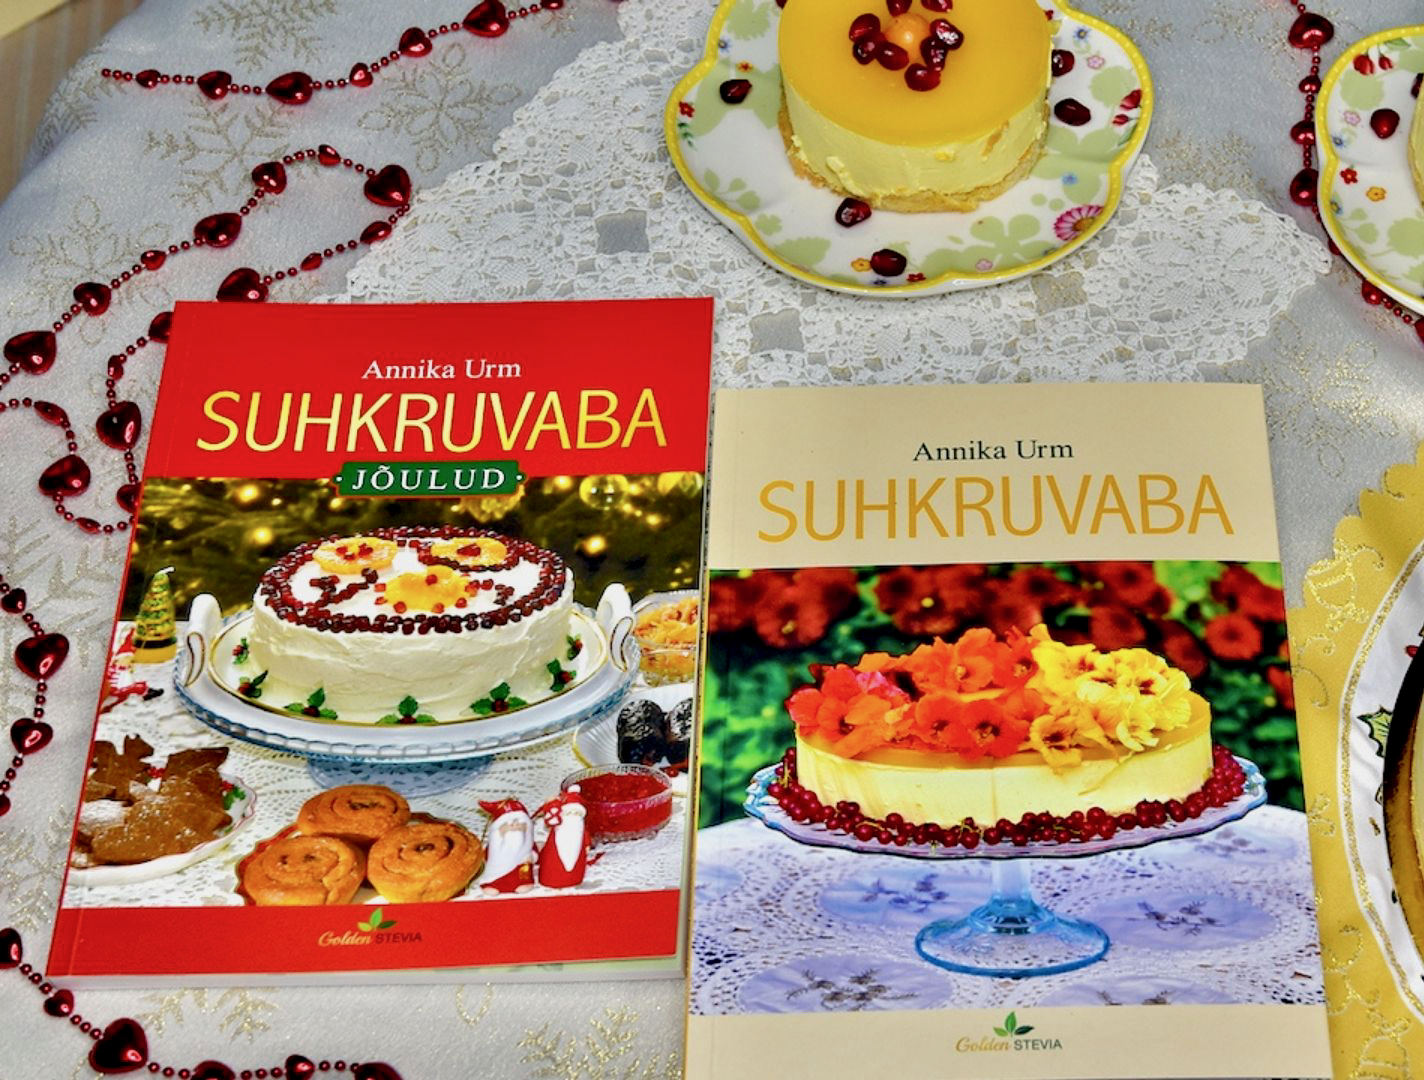 Annika Urm author of two SUGARFREE cookbooks gluten free low carb keto and diabetic friendly